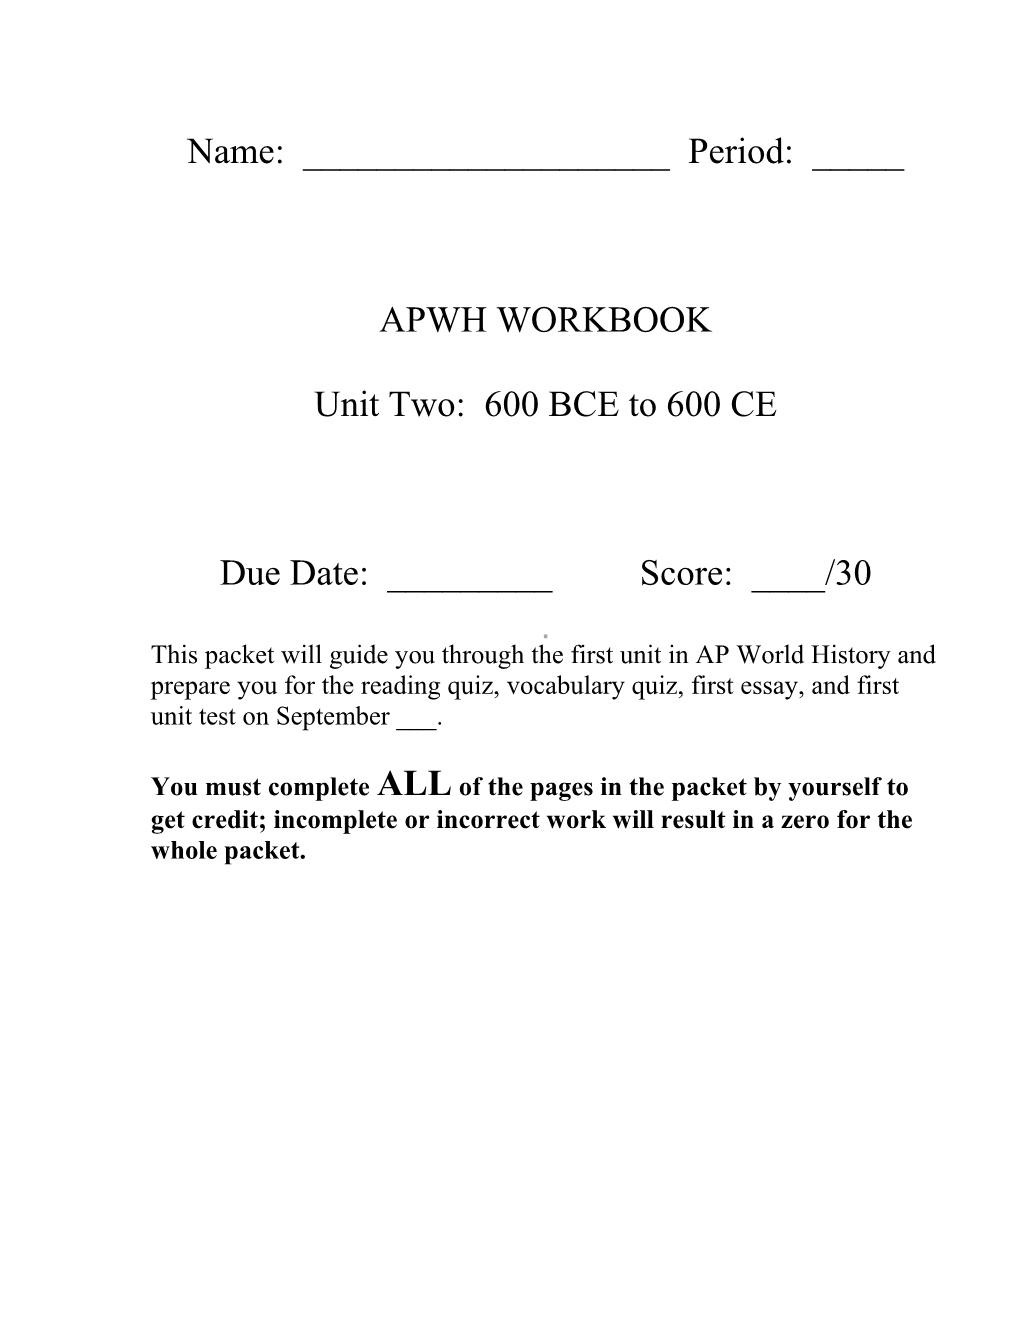 Apwh Workbook